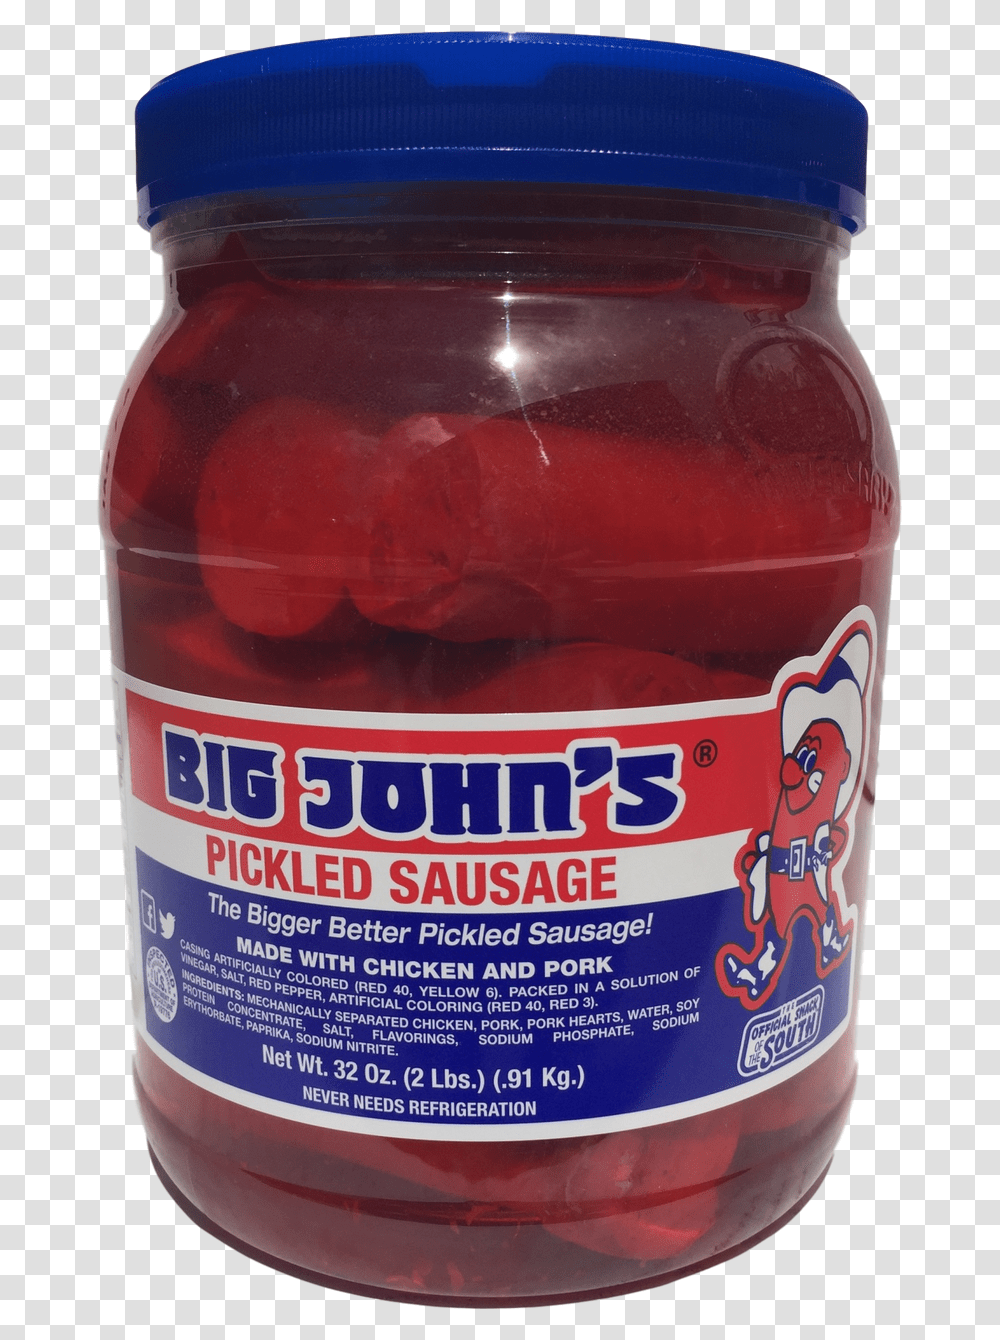 Big John's Pickled Sausage Strawberry, Relish, Food, Beer, Alcohol Transparent Png